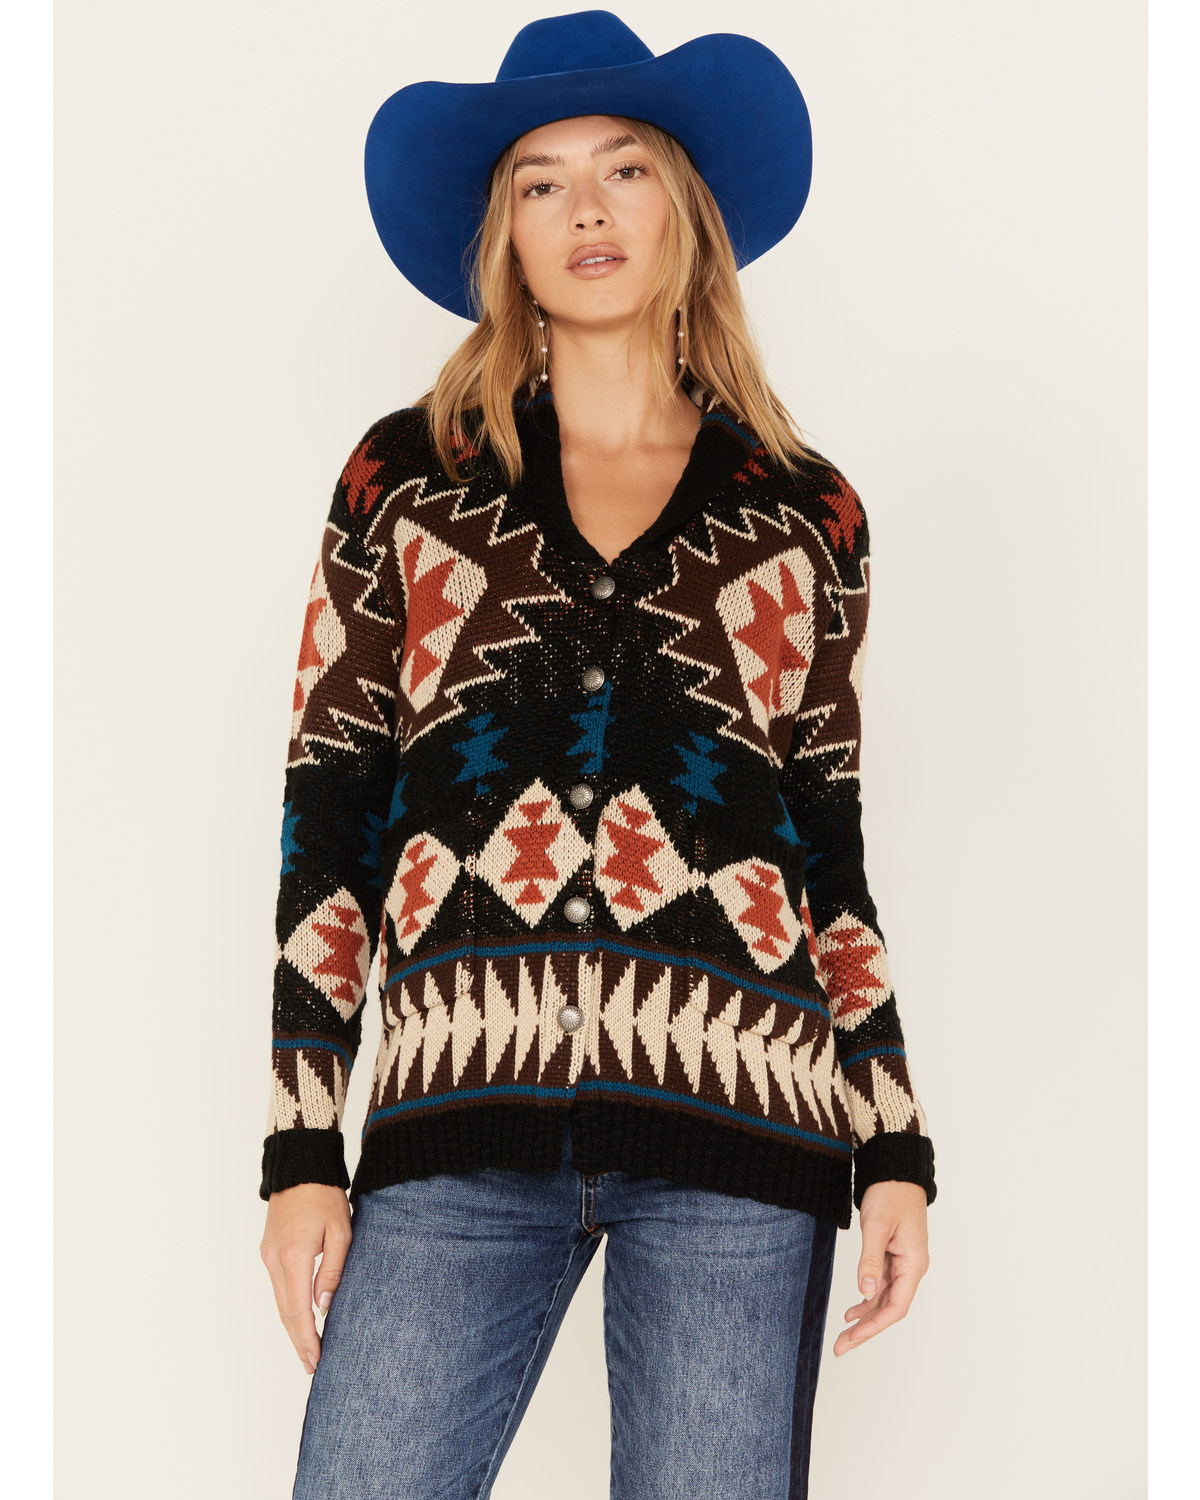 Cotton & Rye Women's Southwestern Print Knit Cardigan Sweater